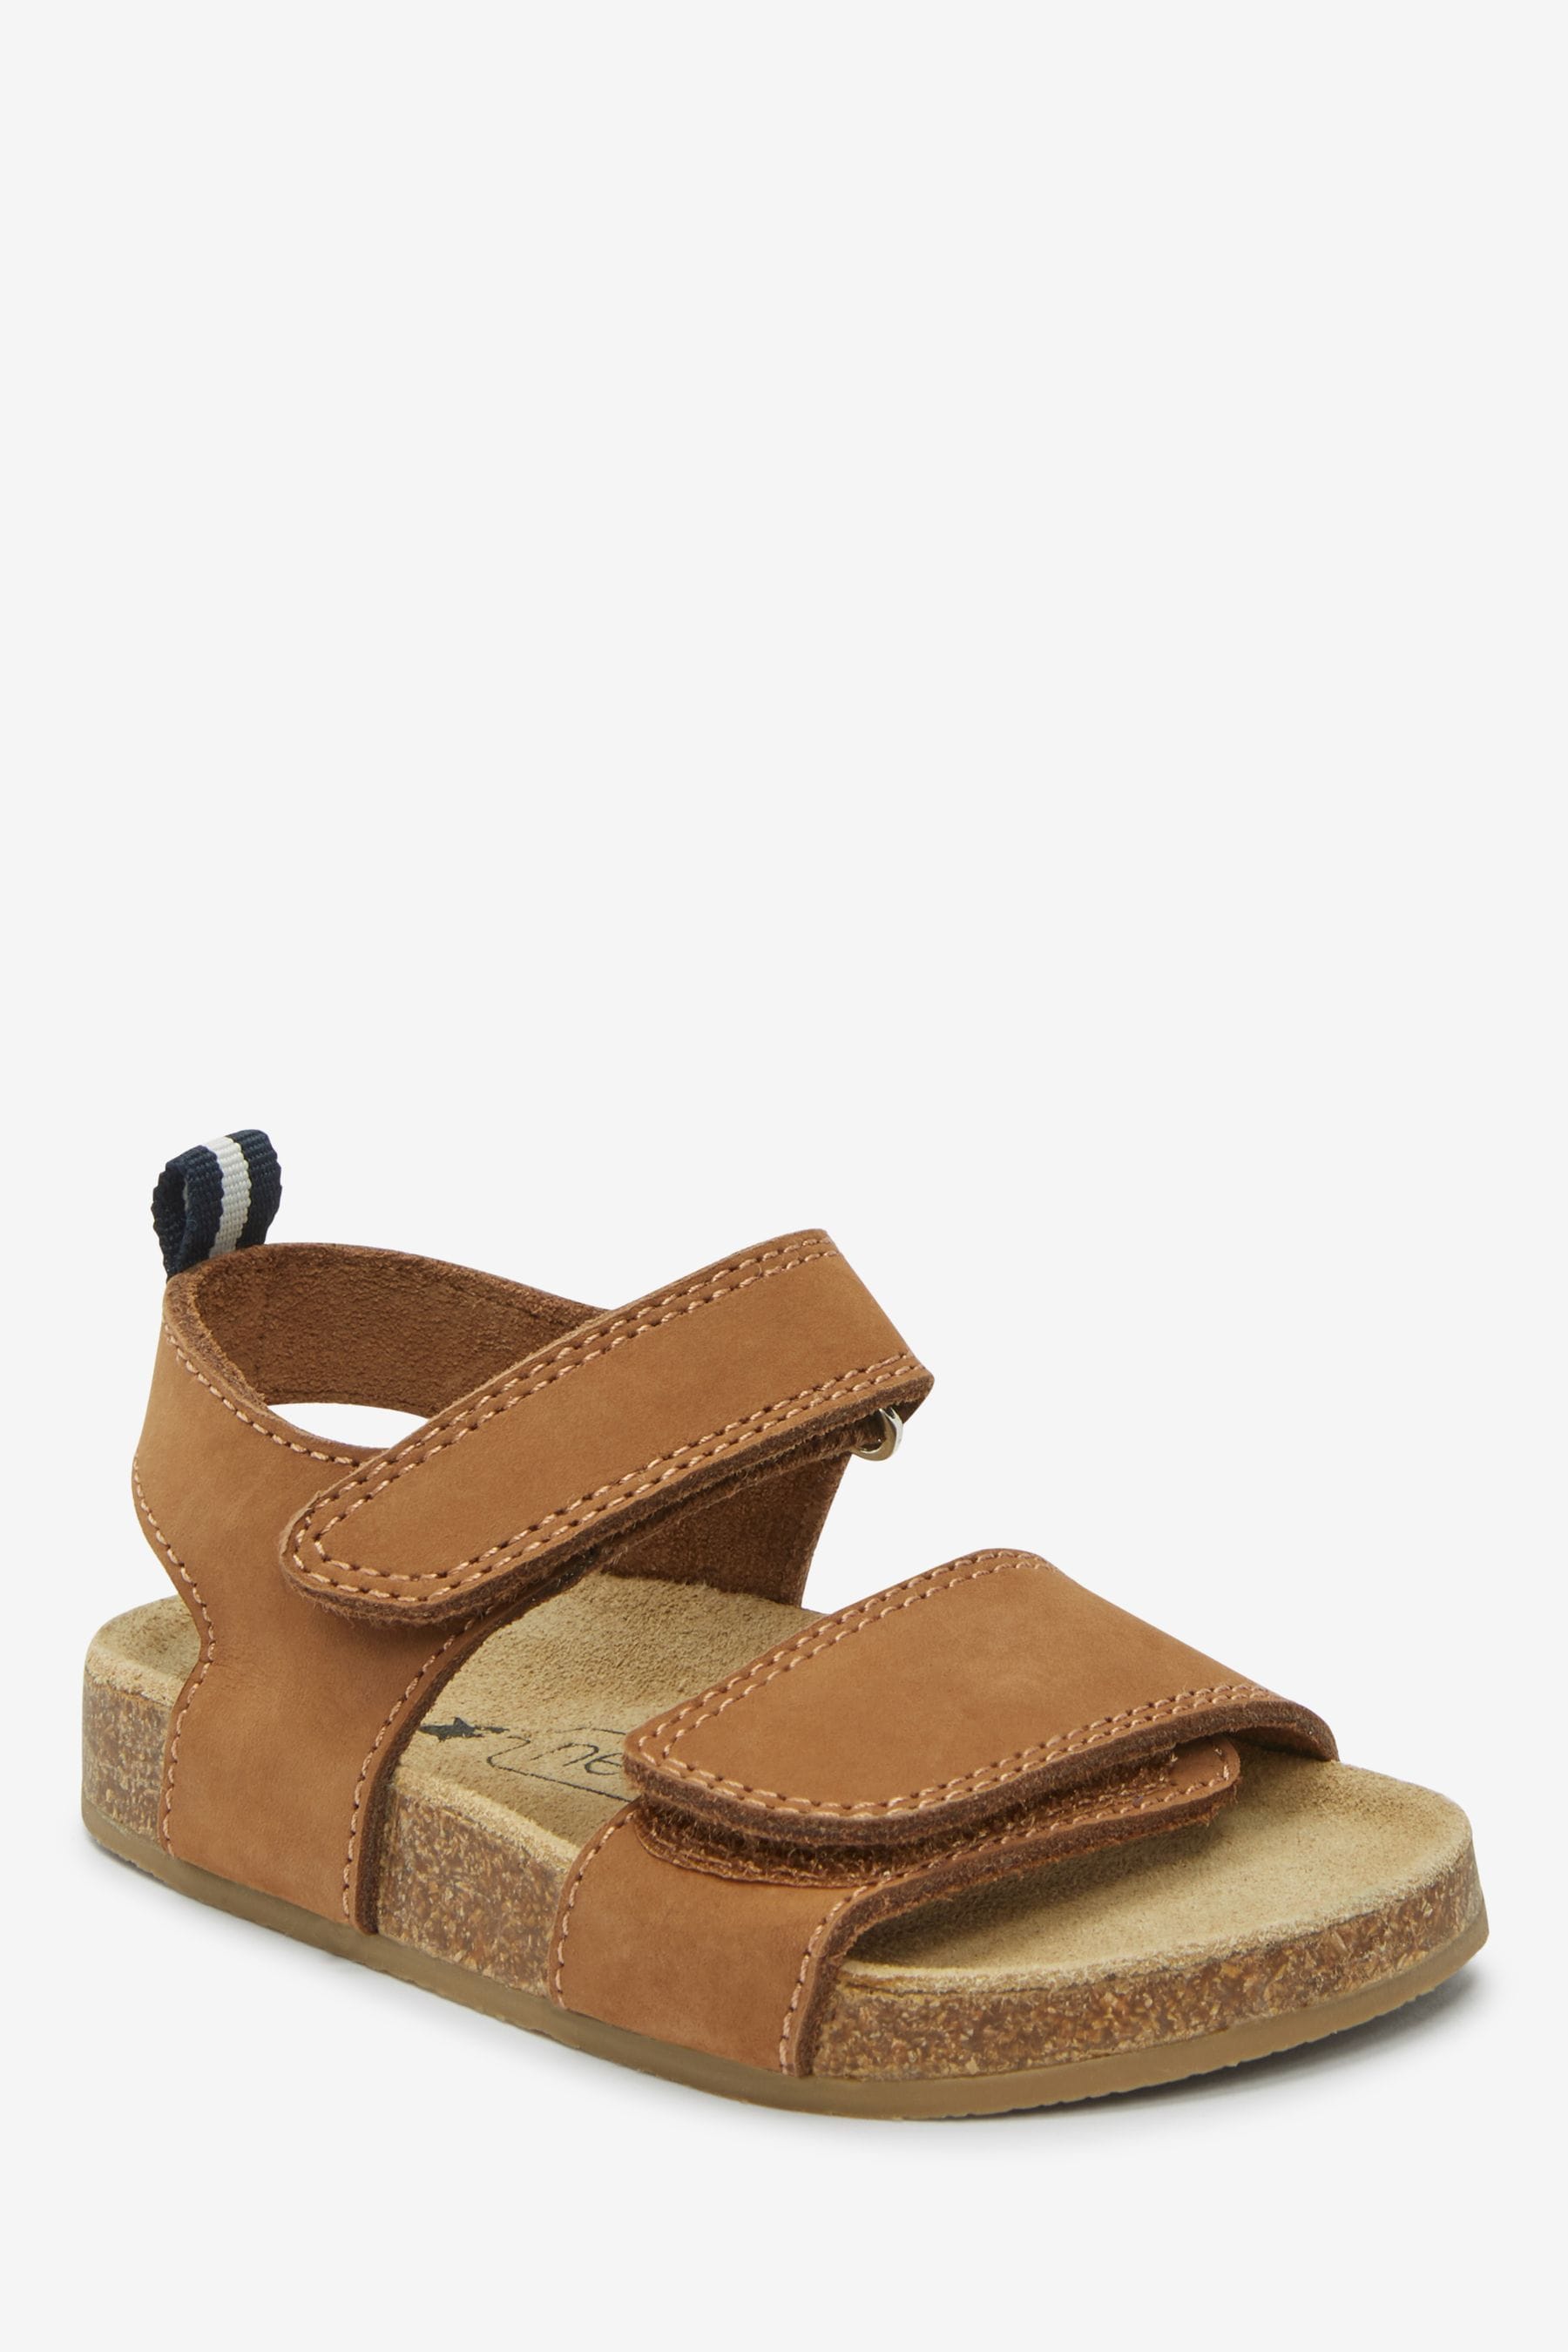 Tan Brown Corkbed Comfort Sandals